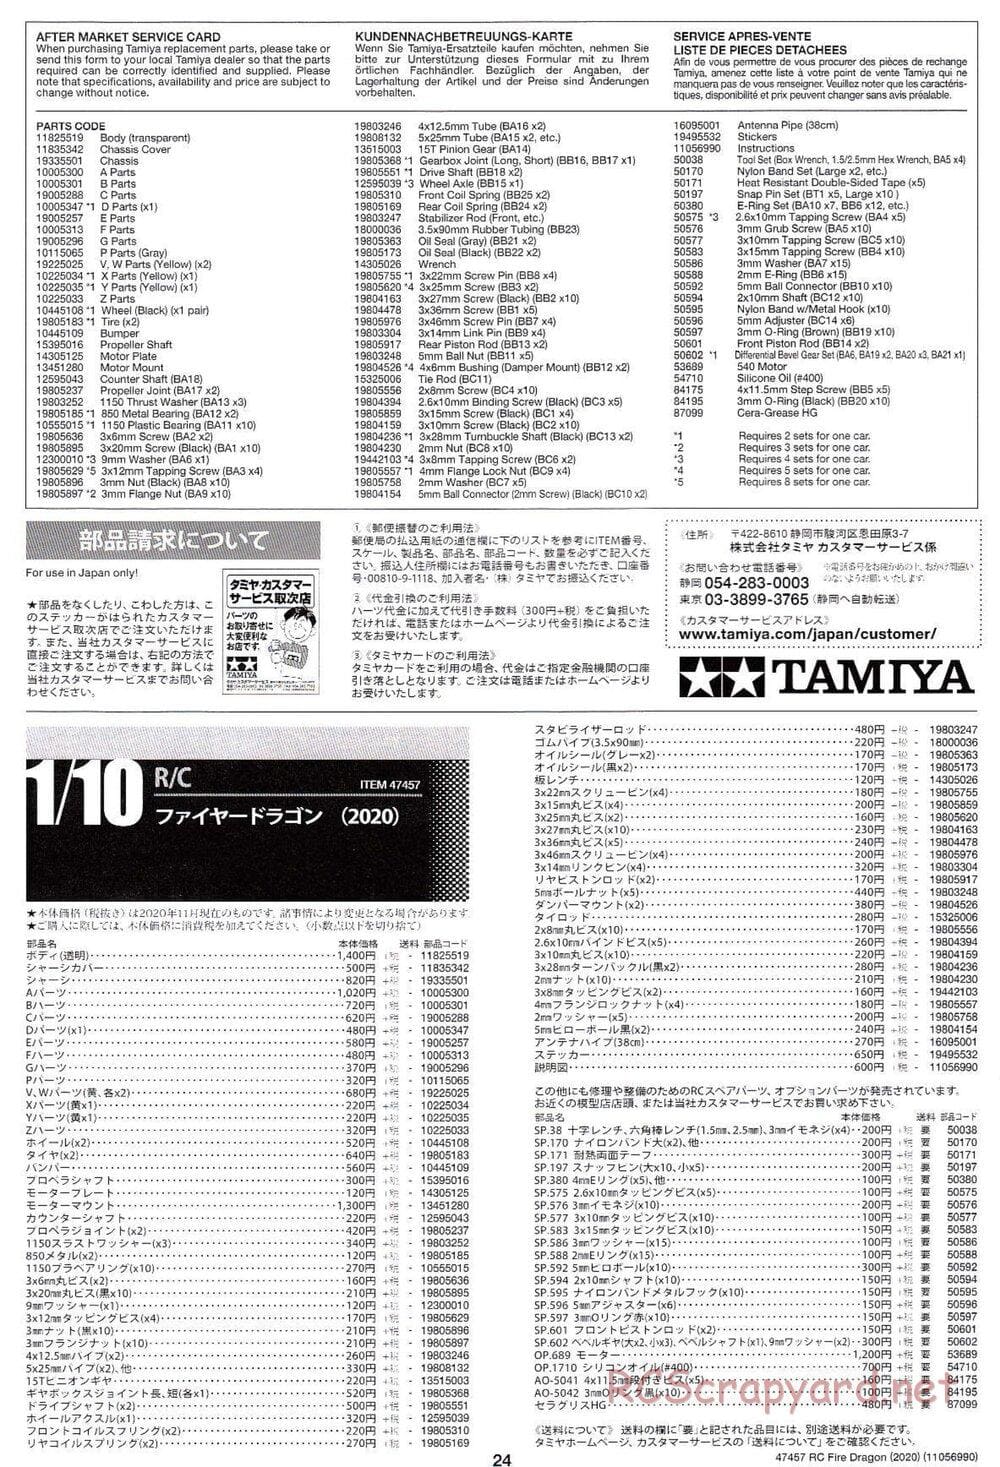 Tamiya - Fire Dragon (2020) Chassis - Manual - Page 24